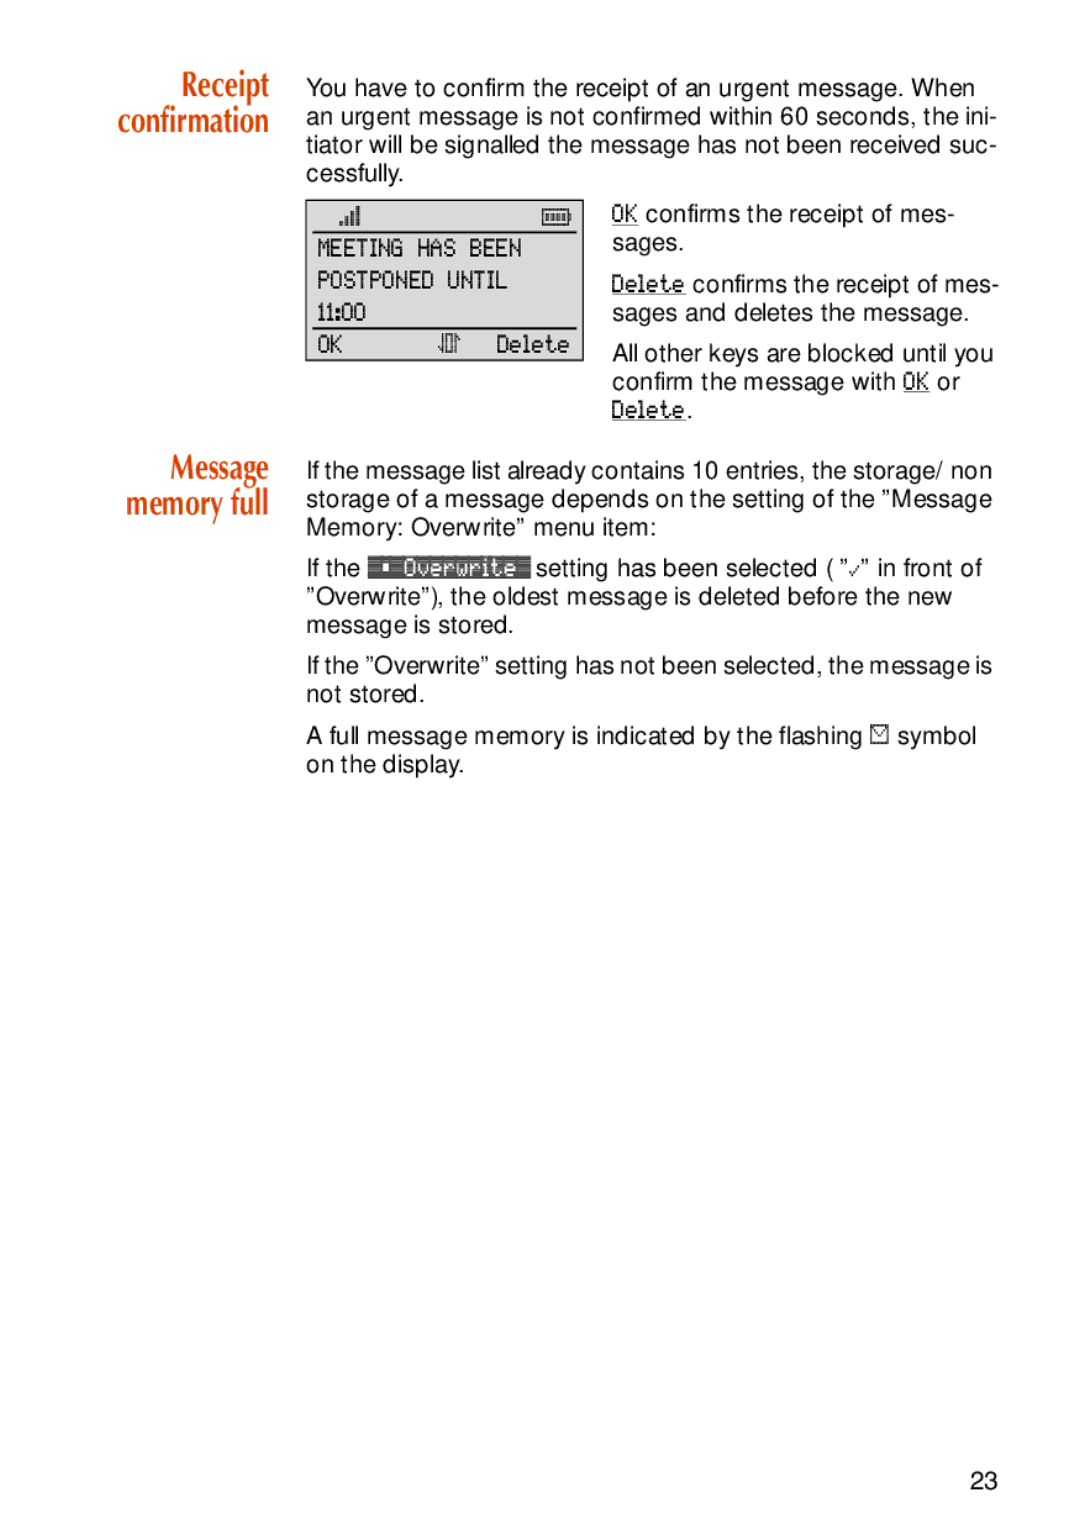 NEC C944 manual Receipt confirmation, Message memory full 